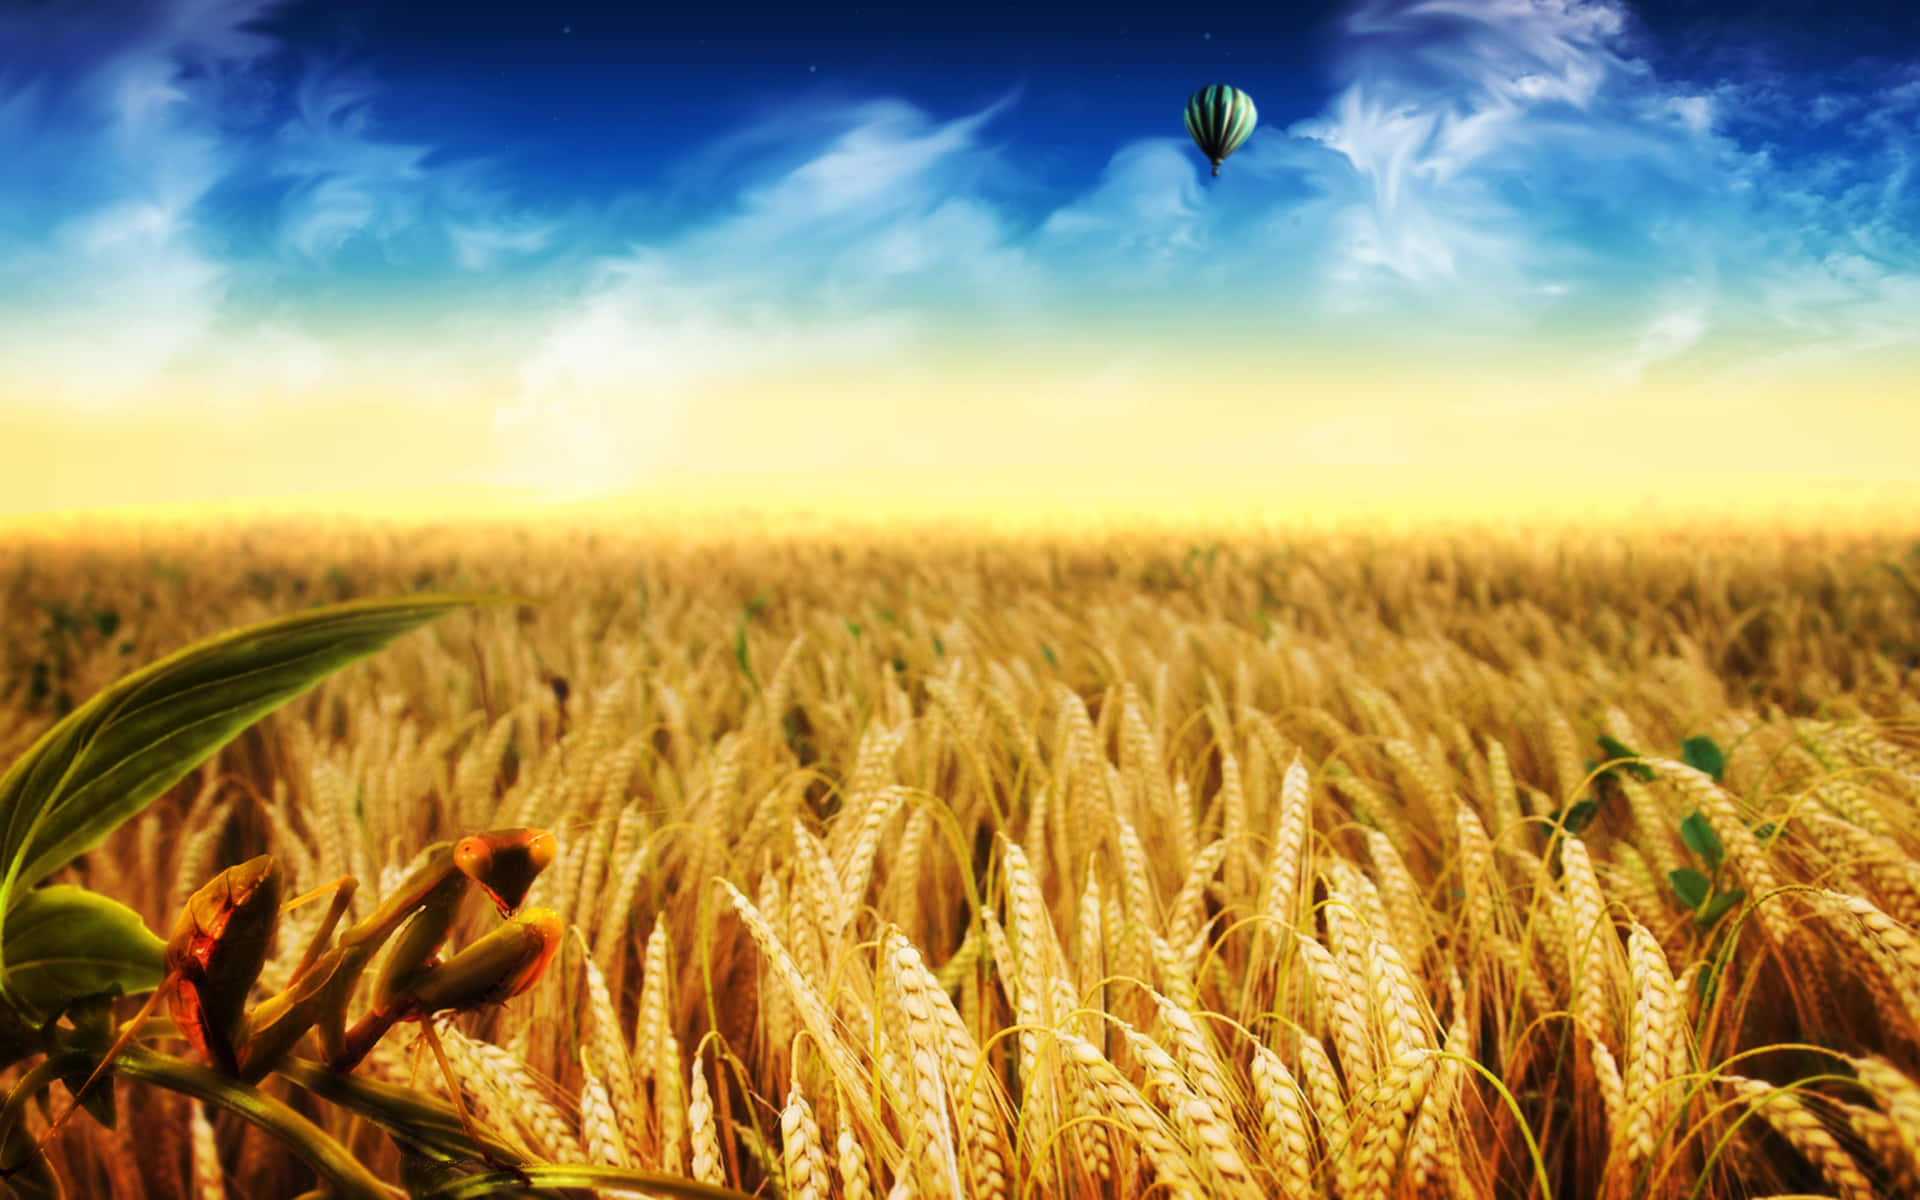 Golden Wheat Harvest in a Sunny Field Wallpaper